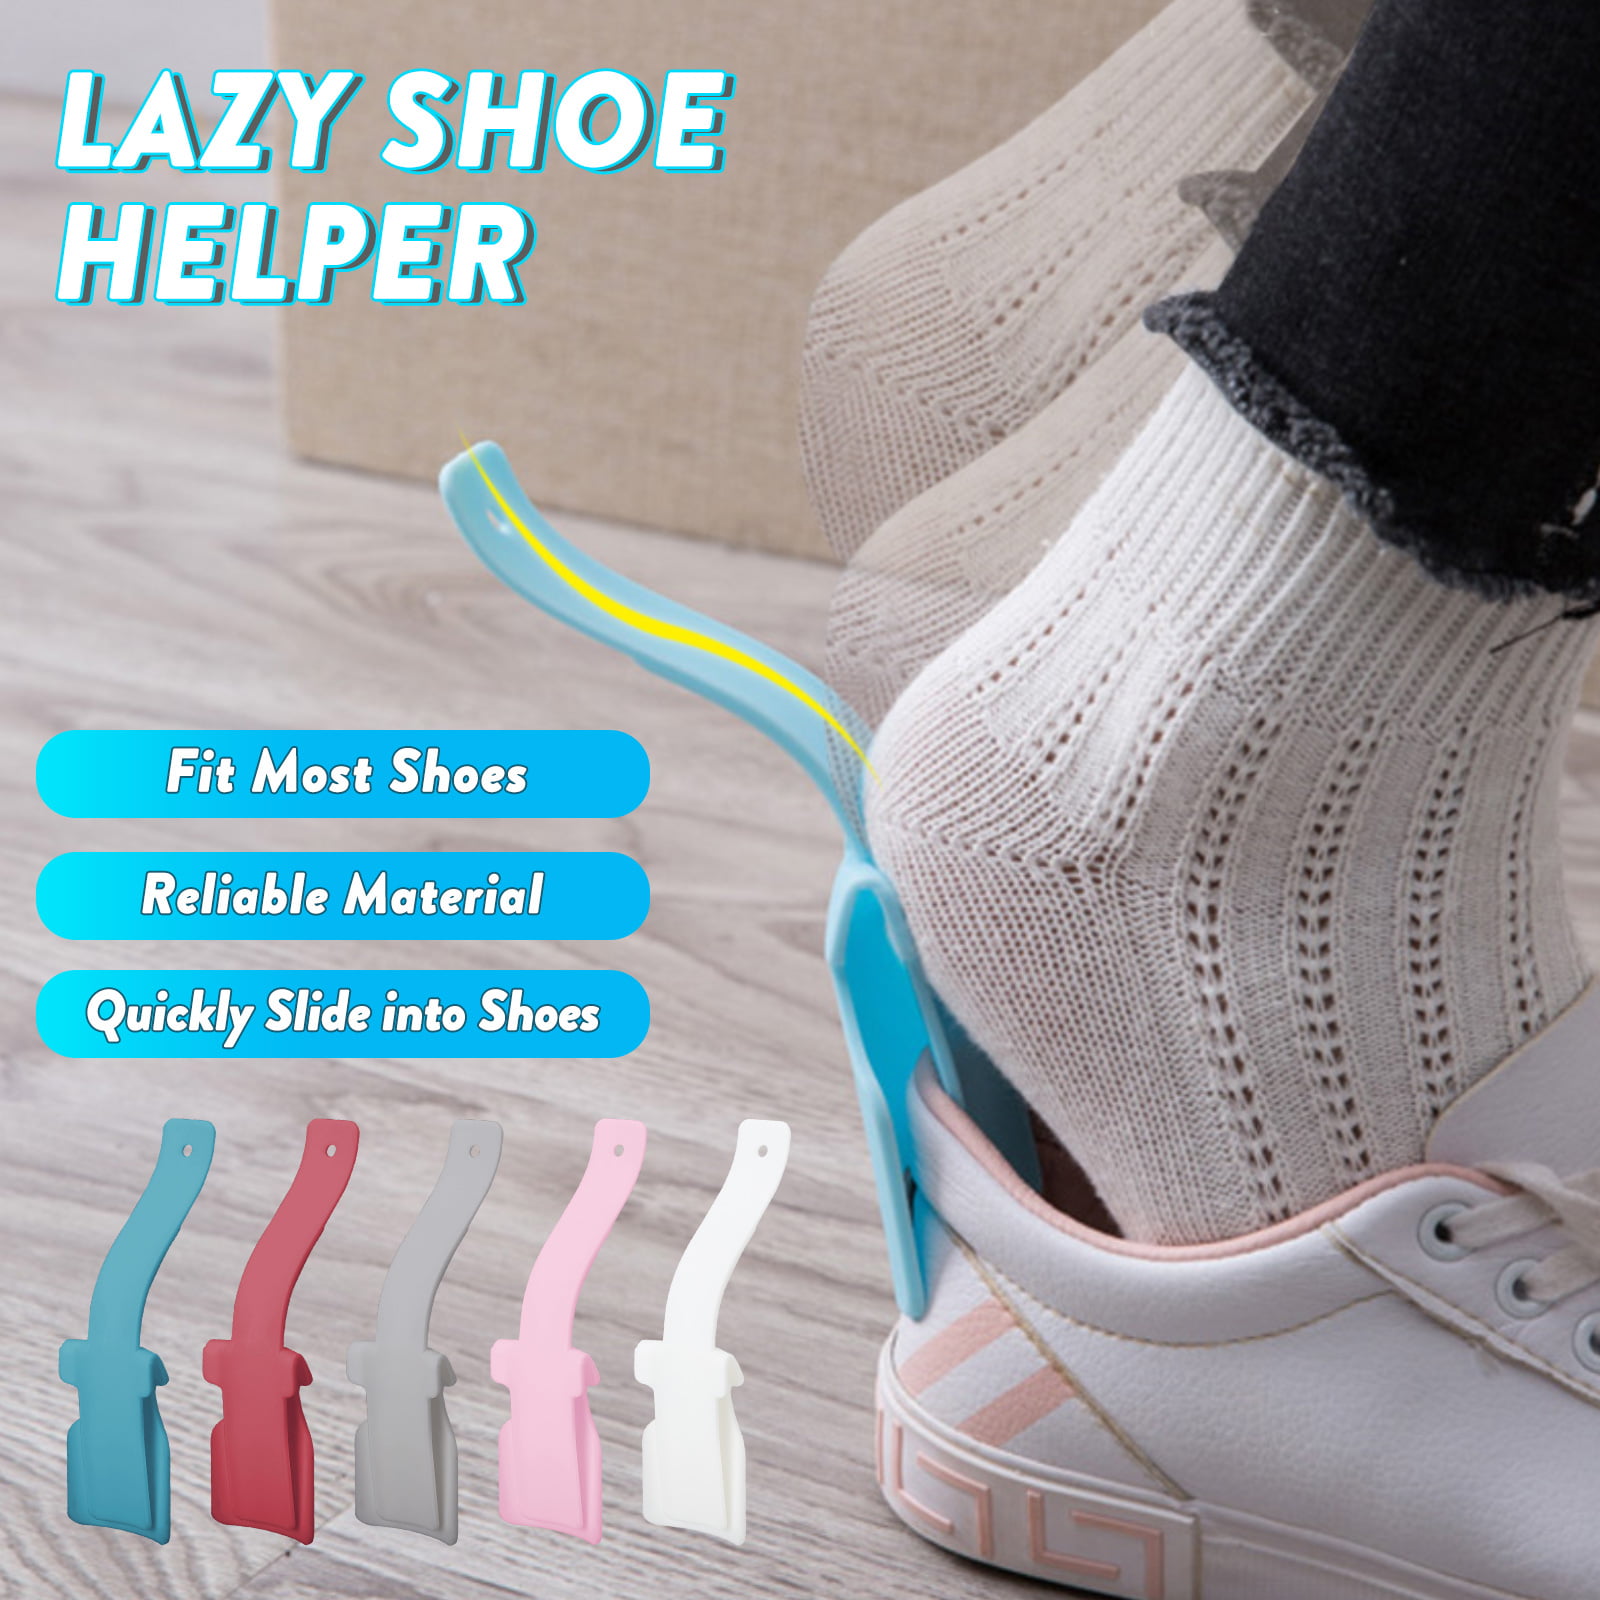 5 pcs ZHive Lazy Shoe Helper Unisex Handled Shoe Horn Easy on & Off Shoe Lifting Helper